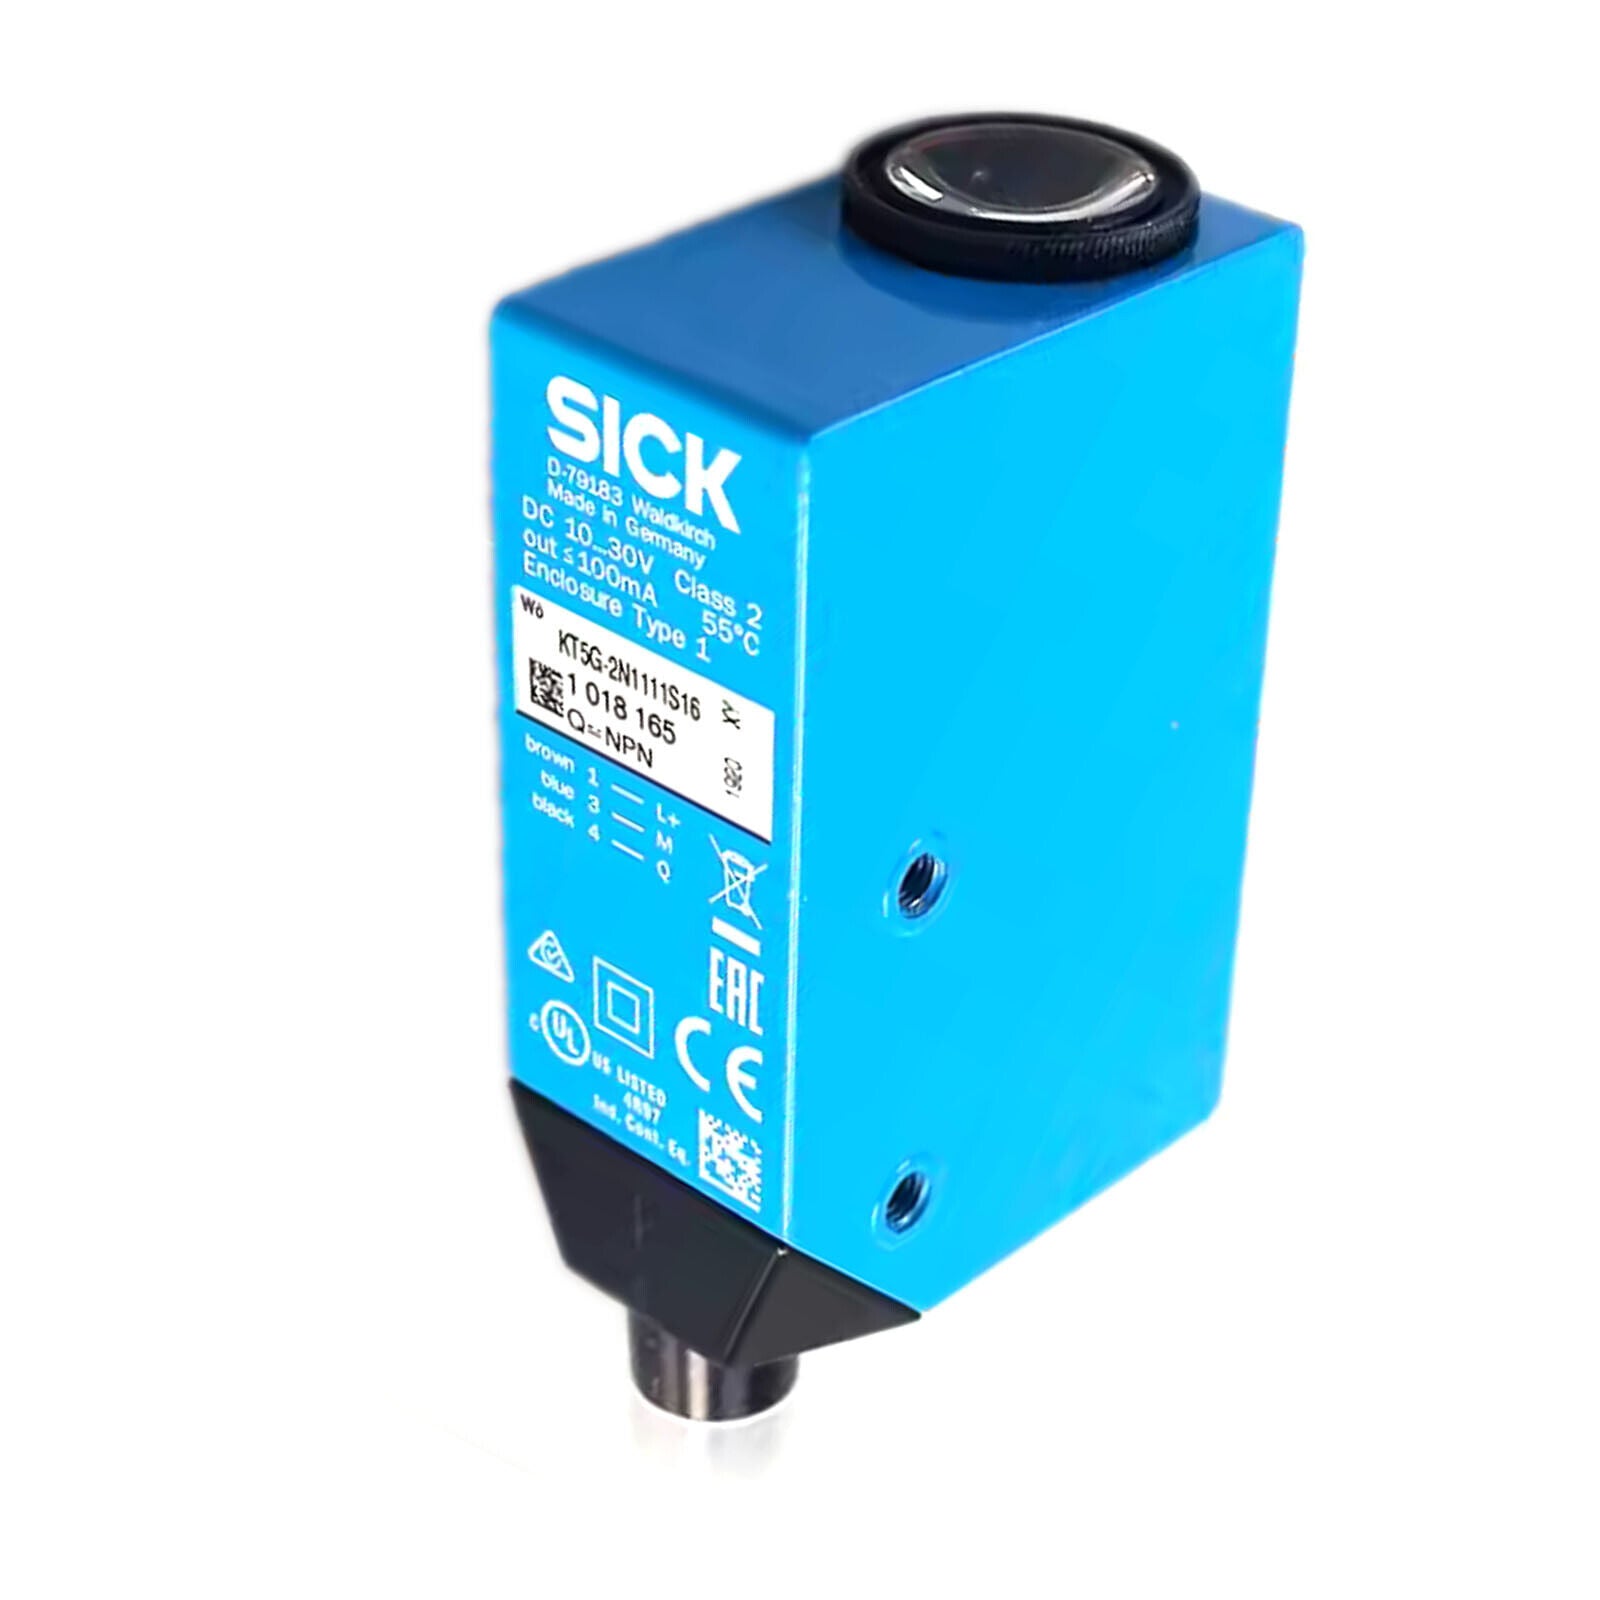 SICK KT5G-2N1111S16 Color Mark Sensor